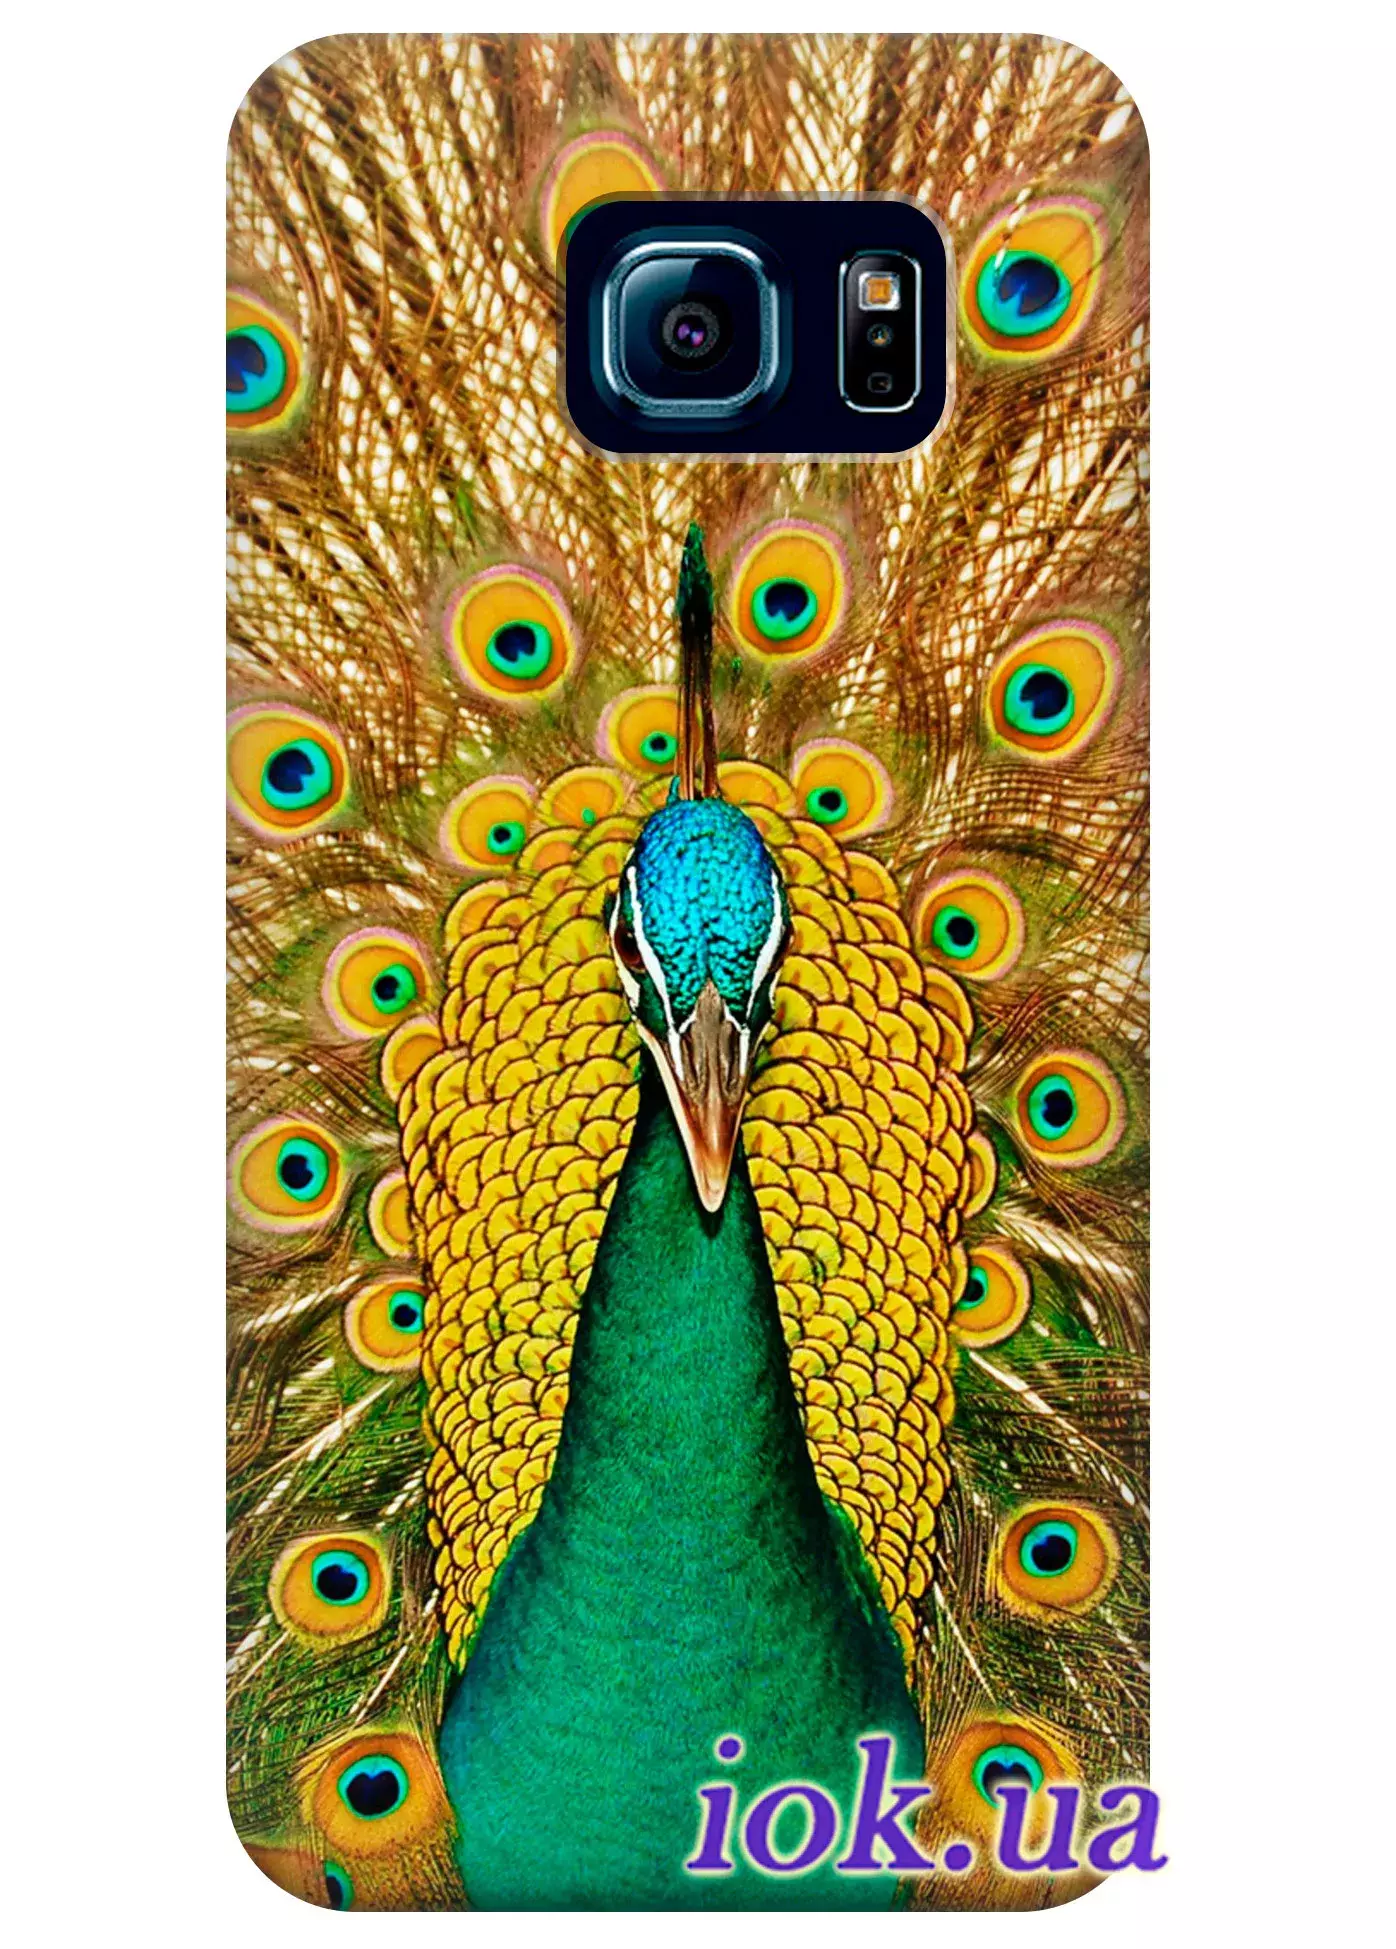 Чехол для Galaxy S6 Edge Plus - Шикарный павлин